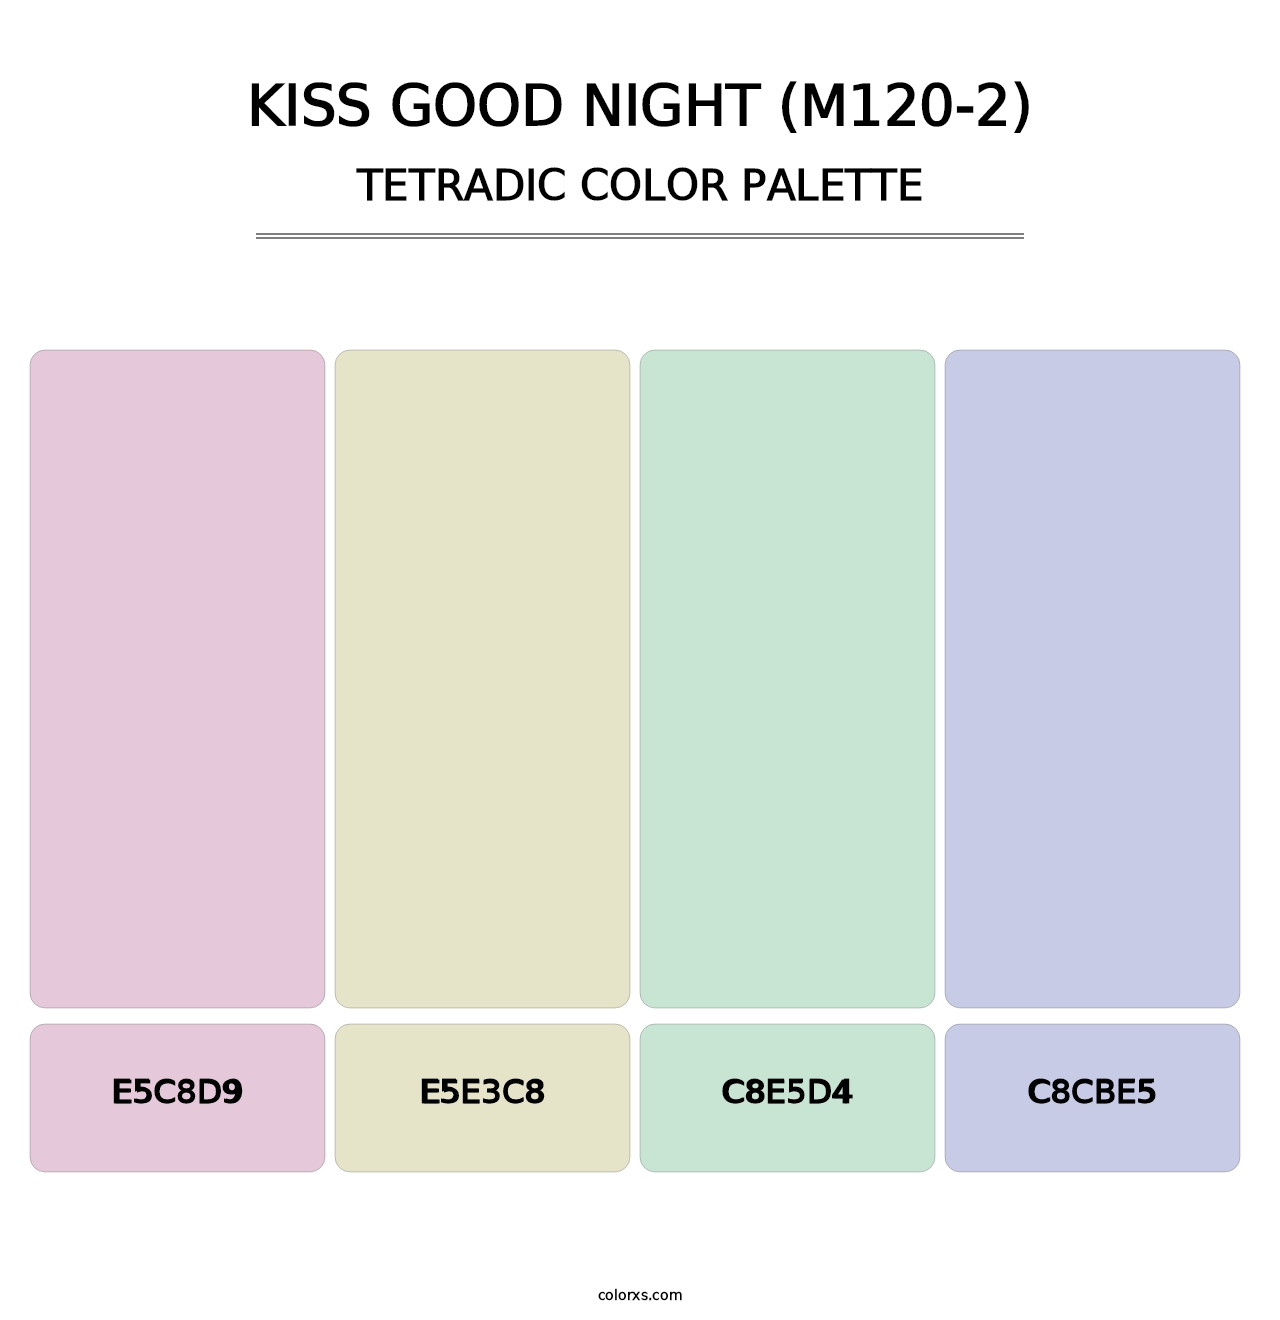 Kiss Good Night (M120-2) - Tetradic Color Palette